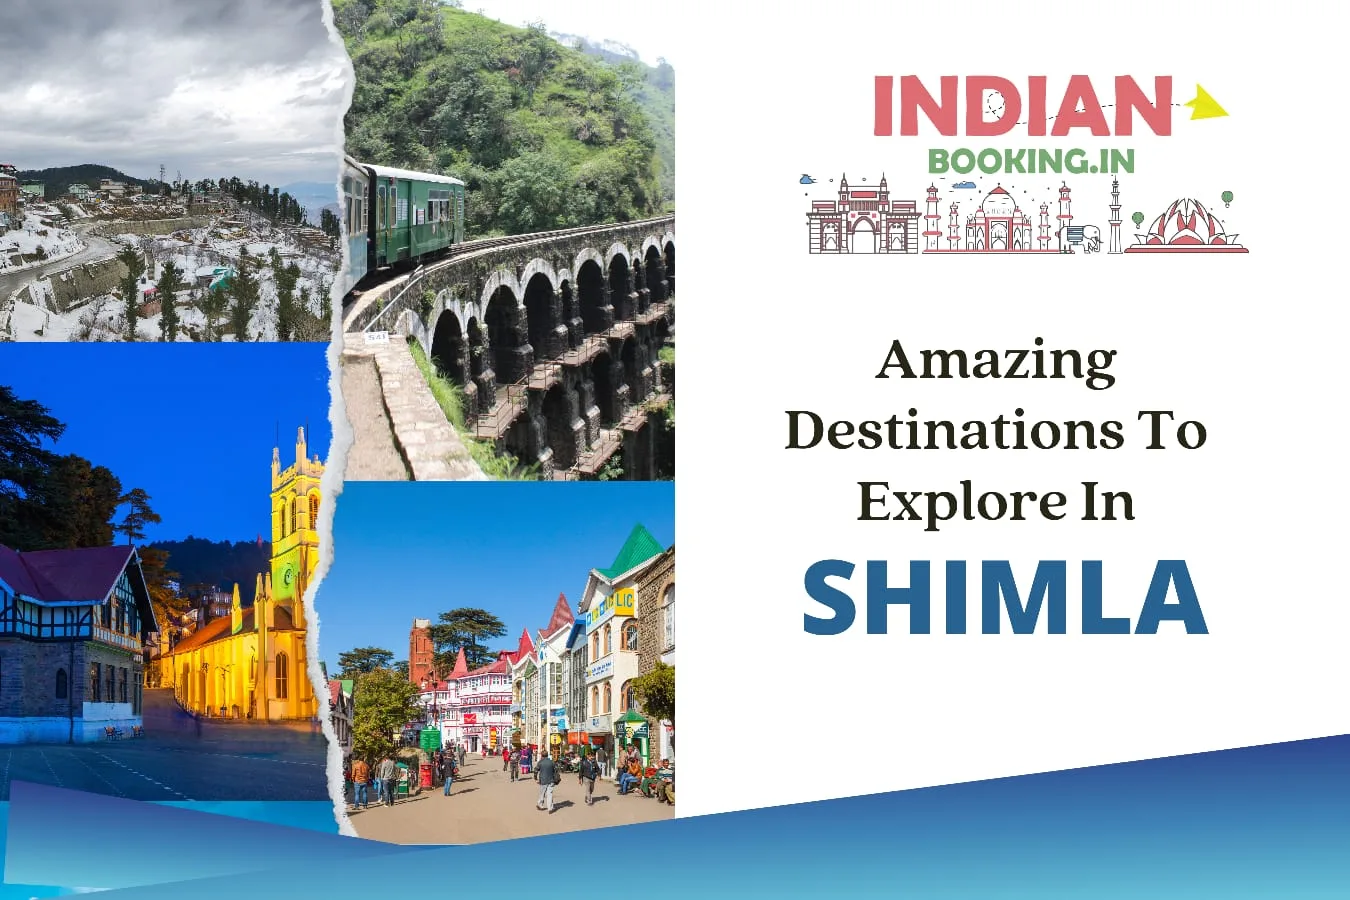 Amazing Destinations to Explore in Shimla